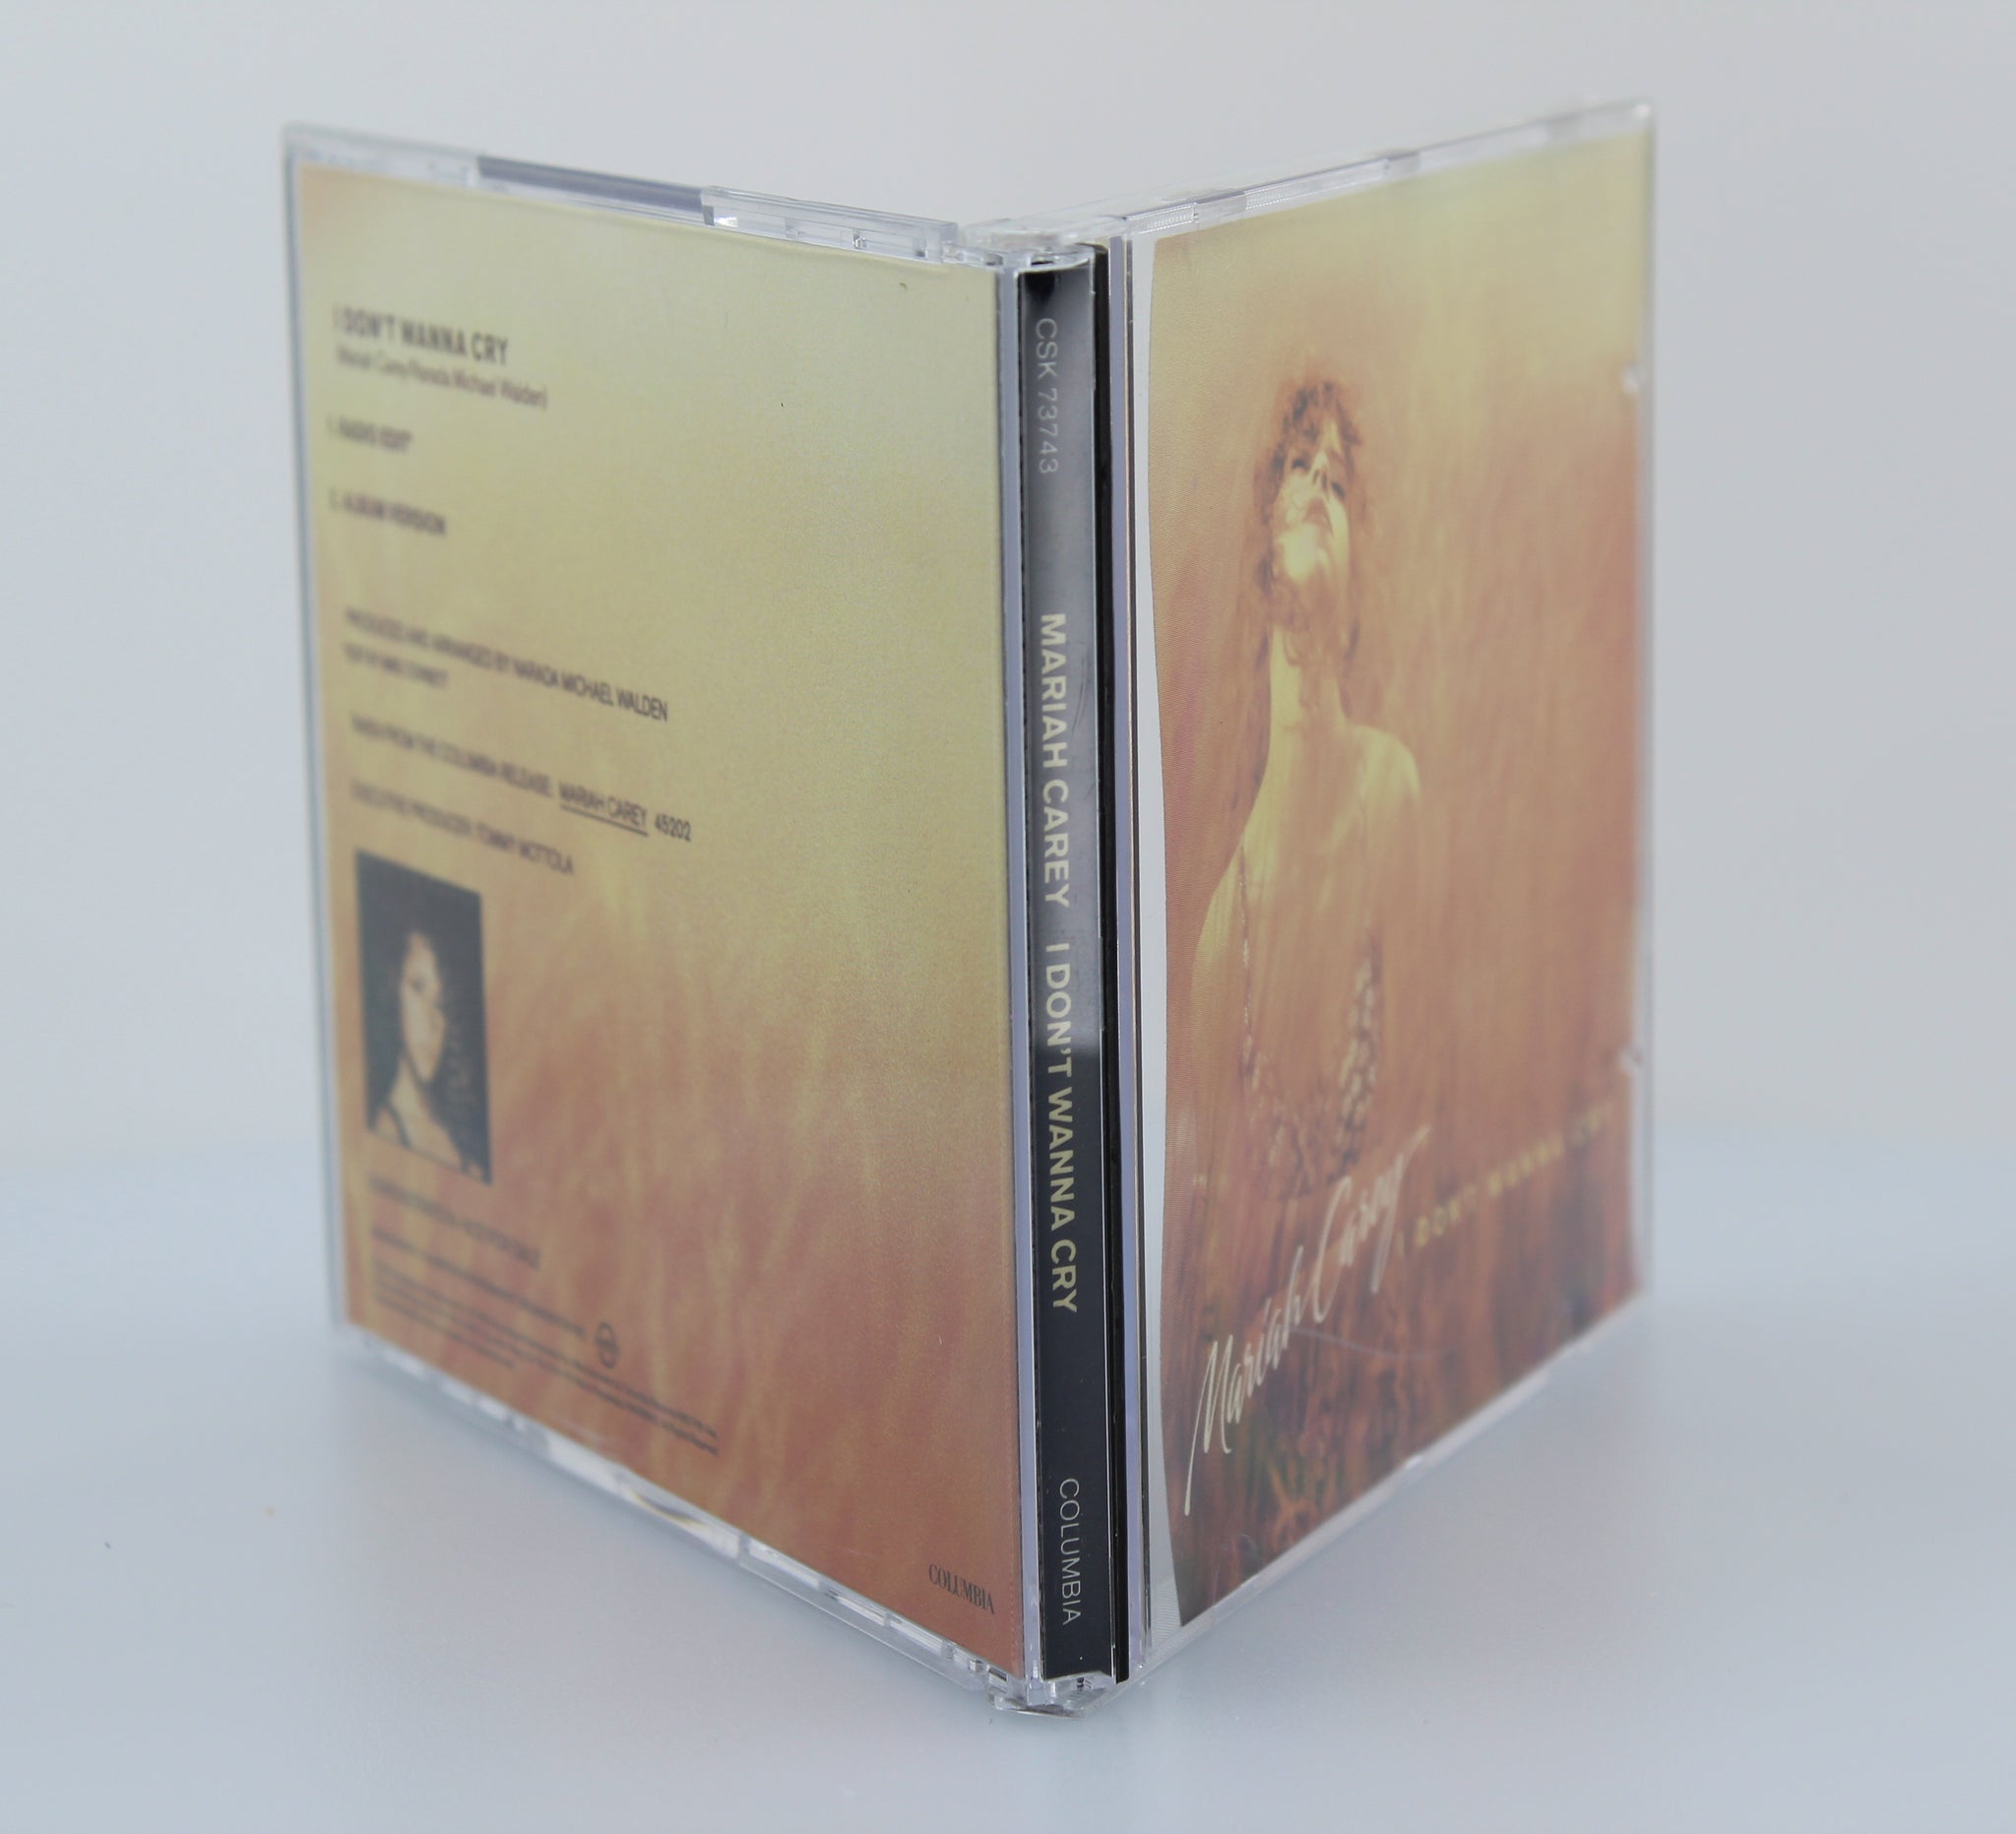 Mariah Carey, I Don't Wanna Cry, CD Single Promo, US 1991 (CD 648